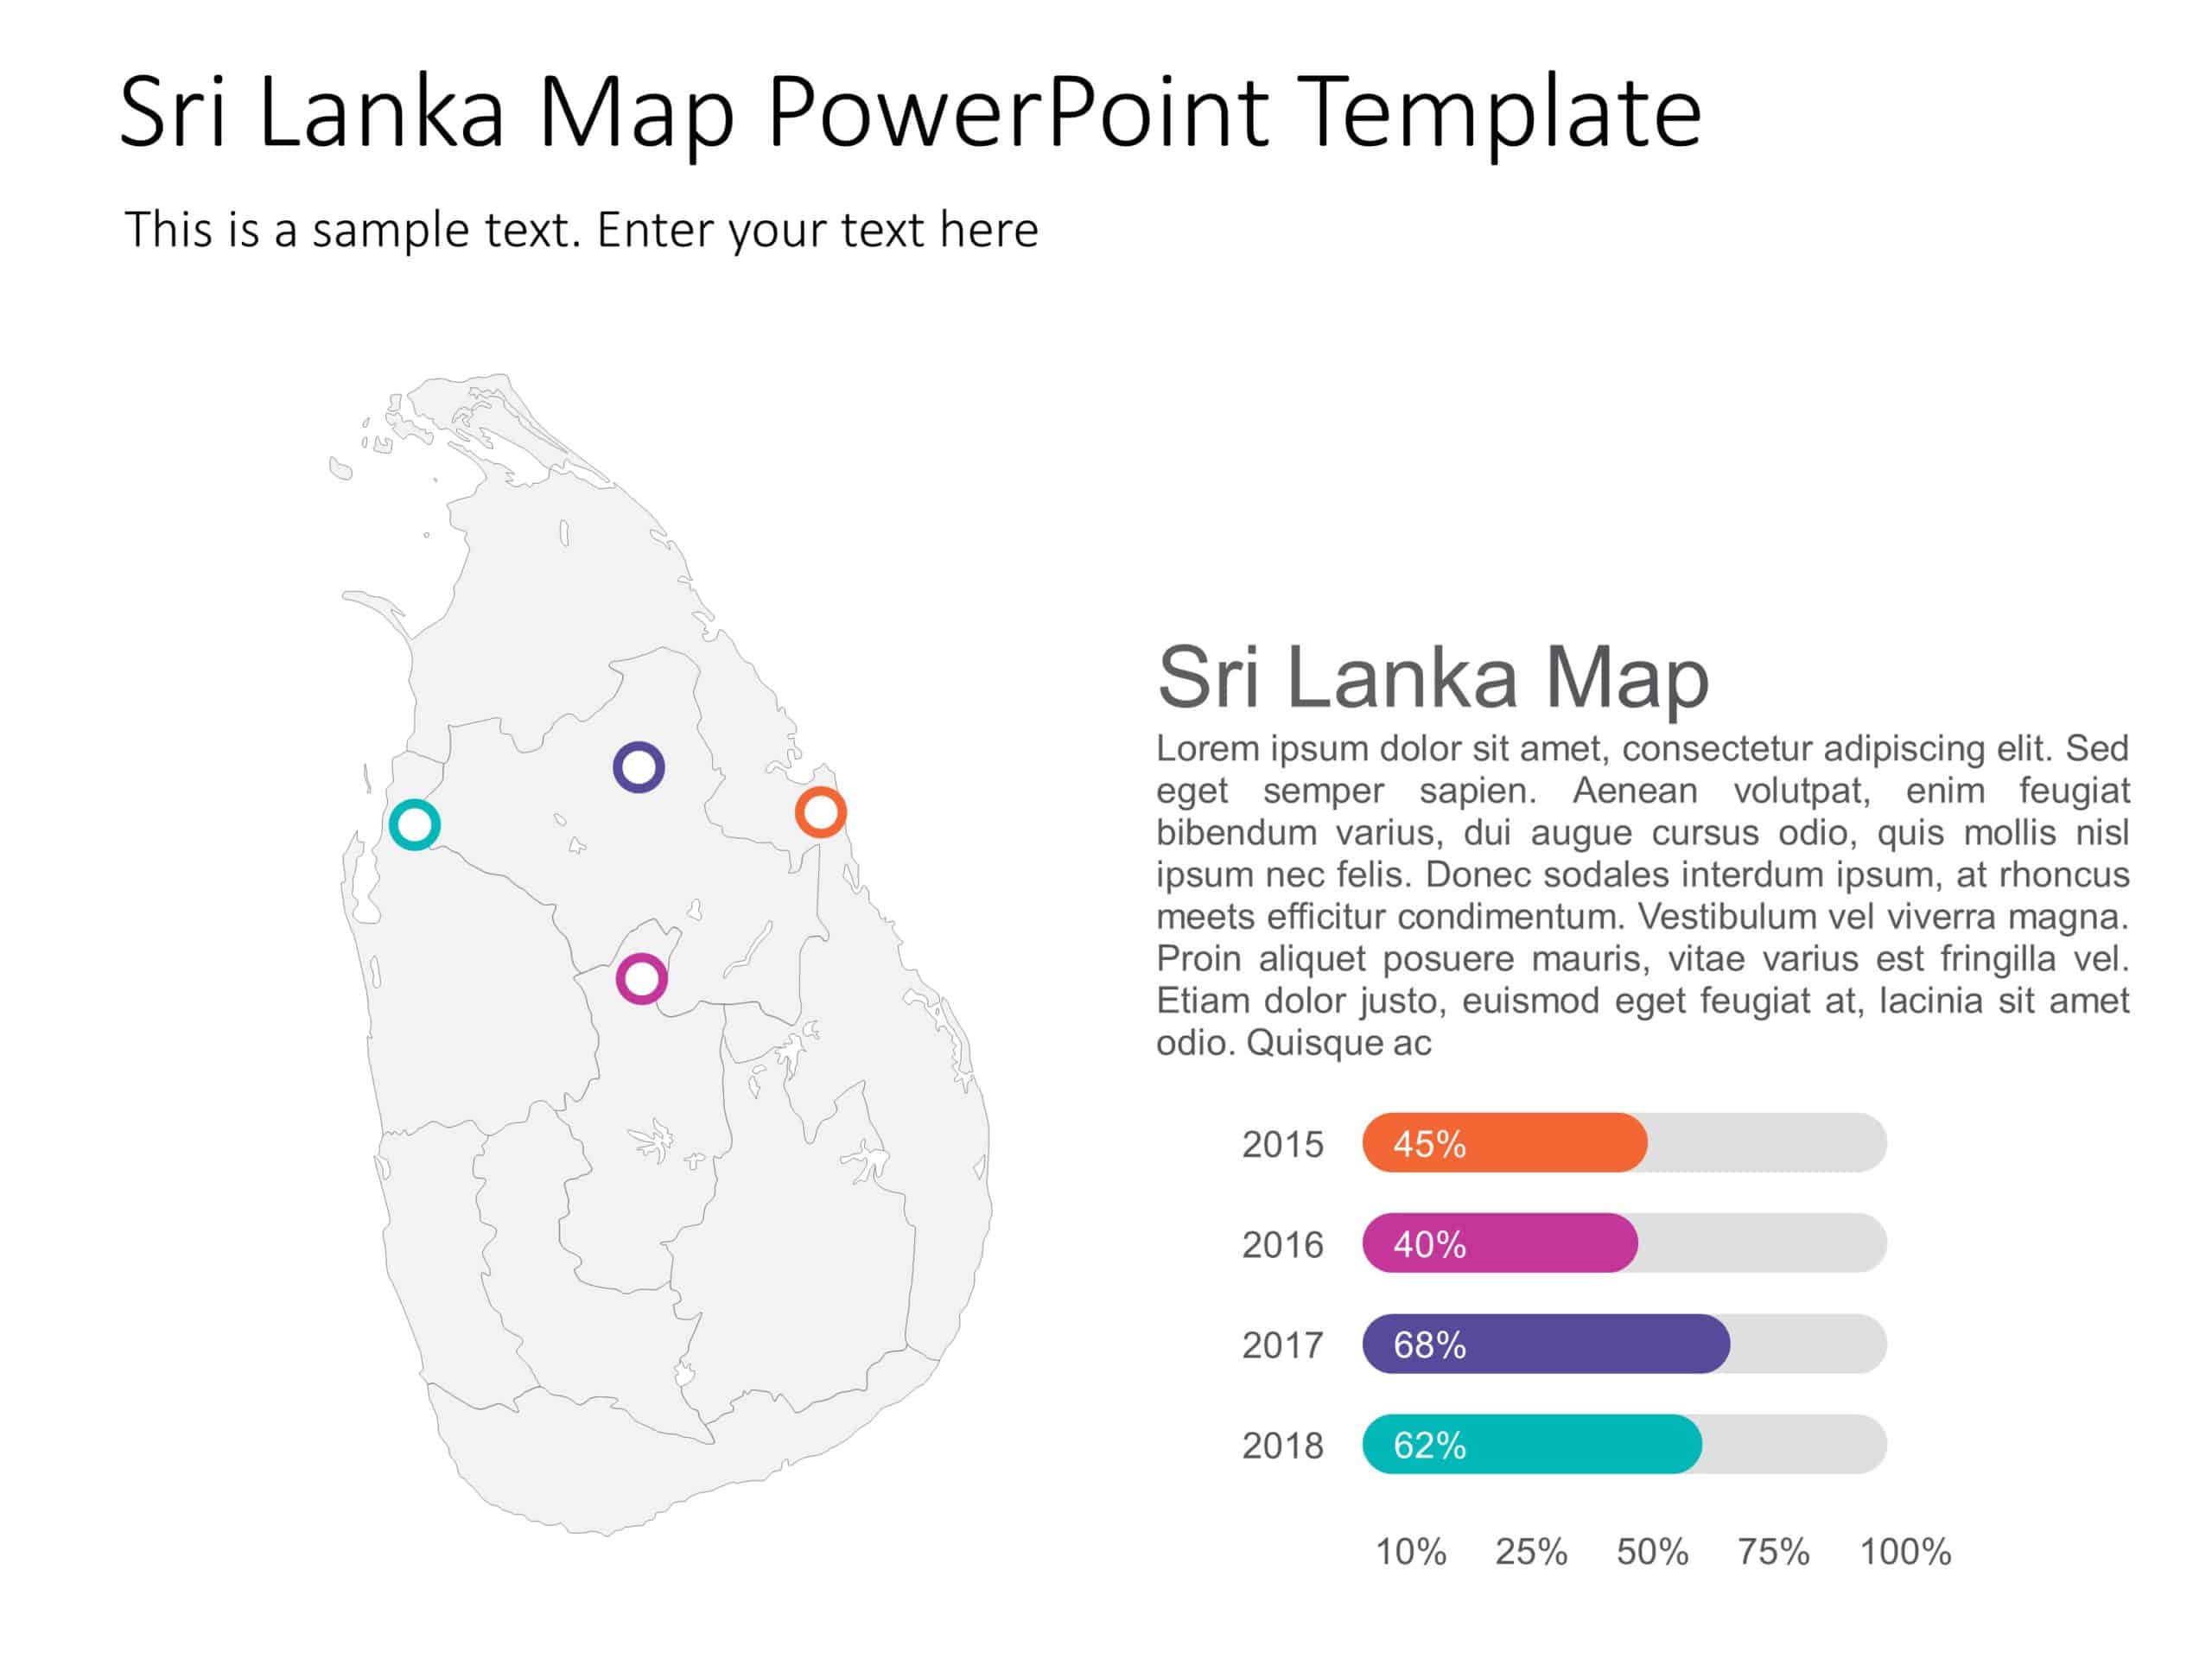 Sri Lanka Map 2 PowerPoint Template